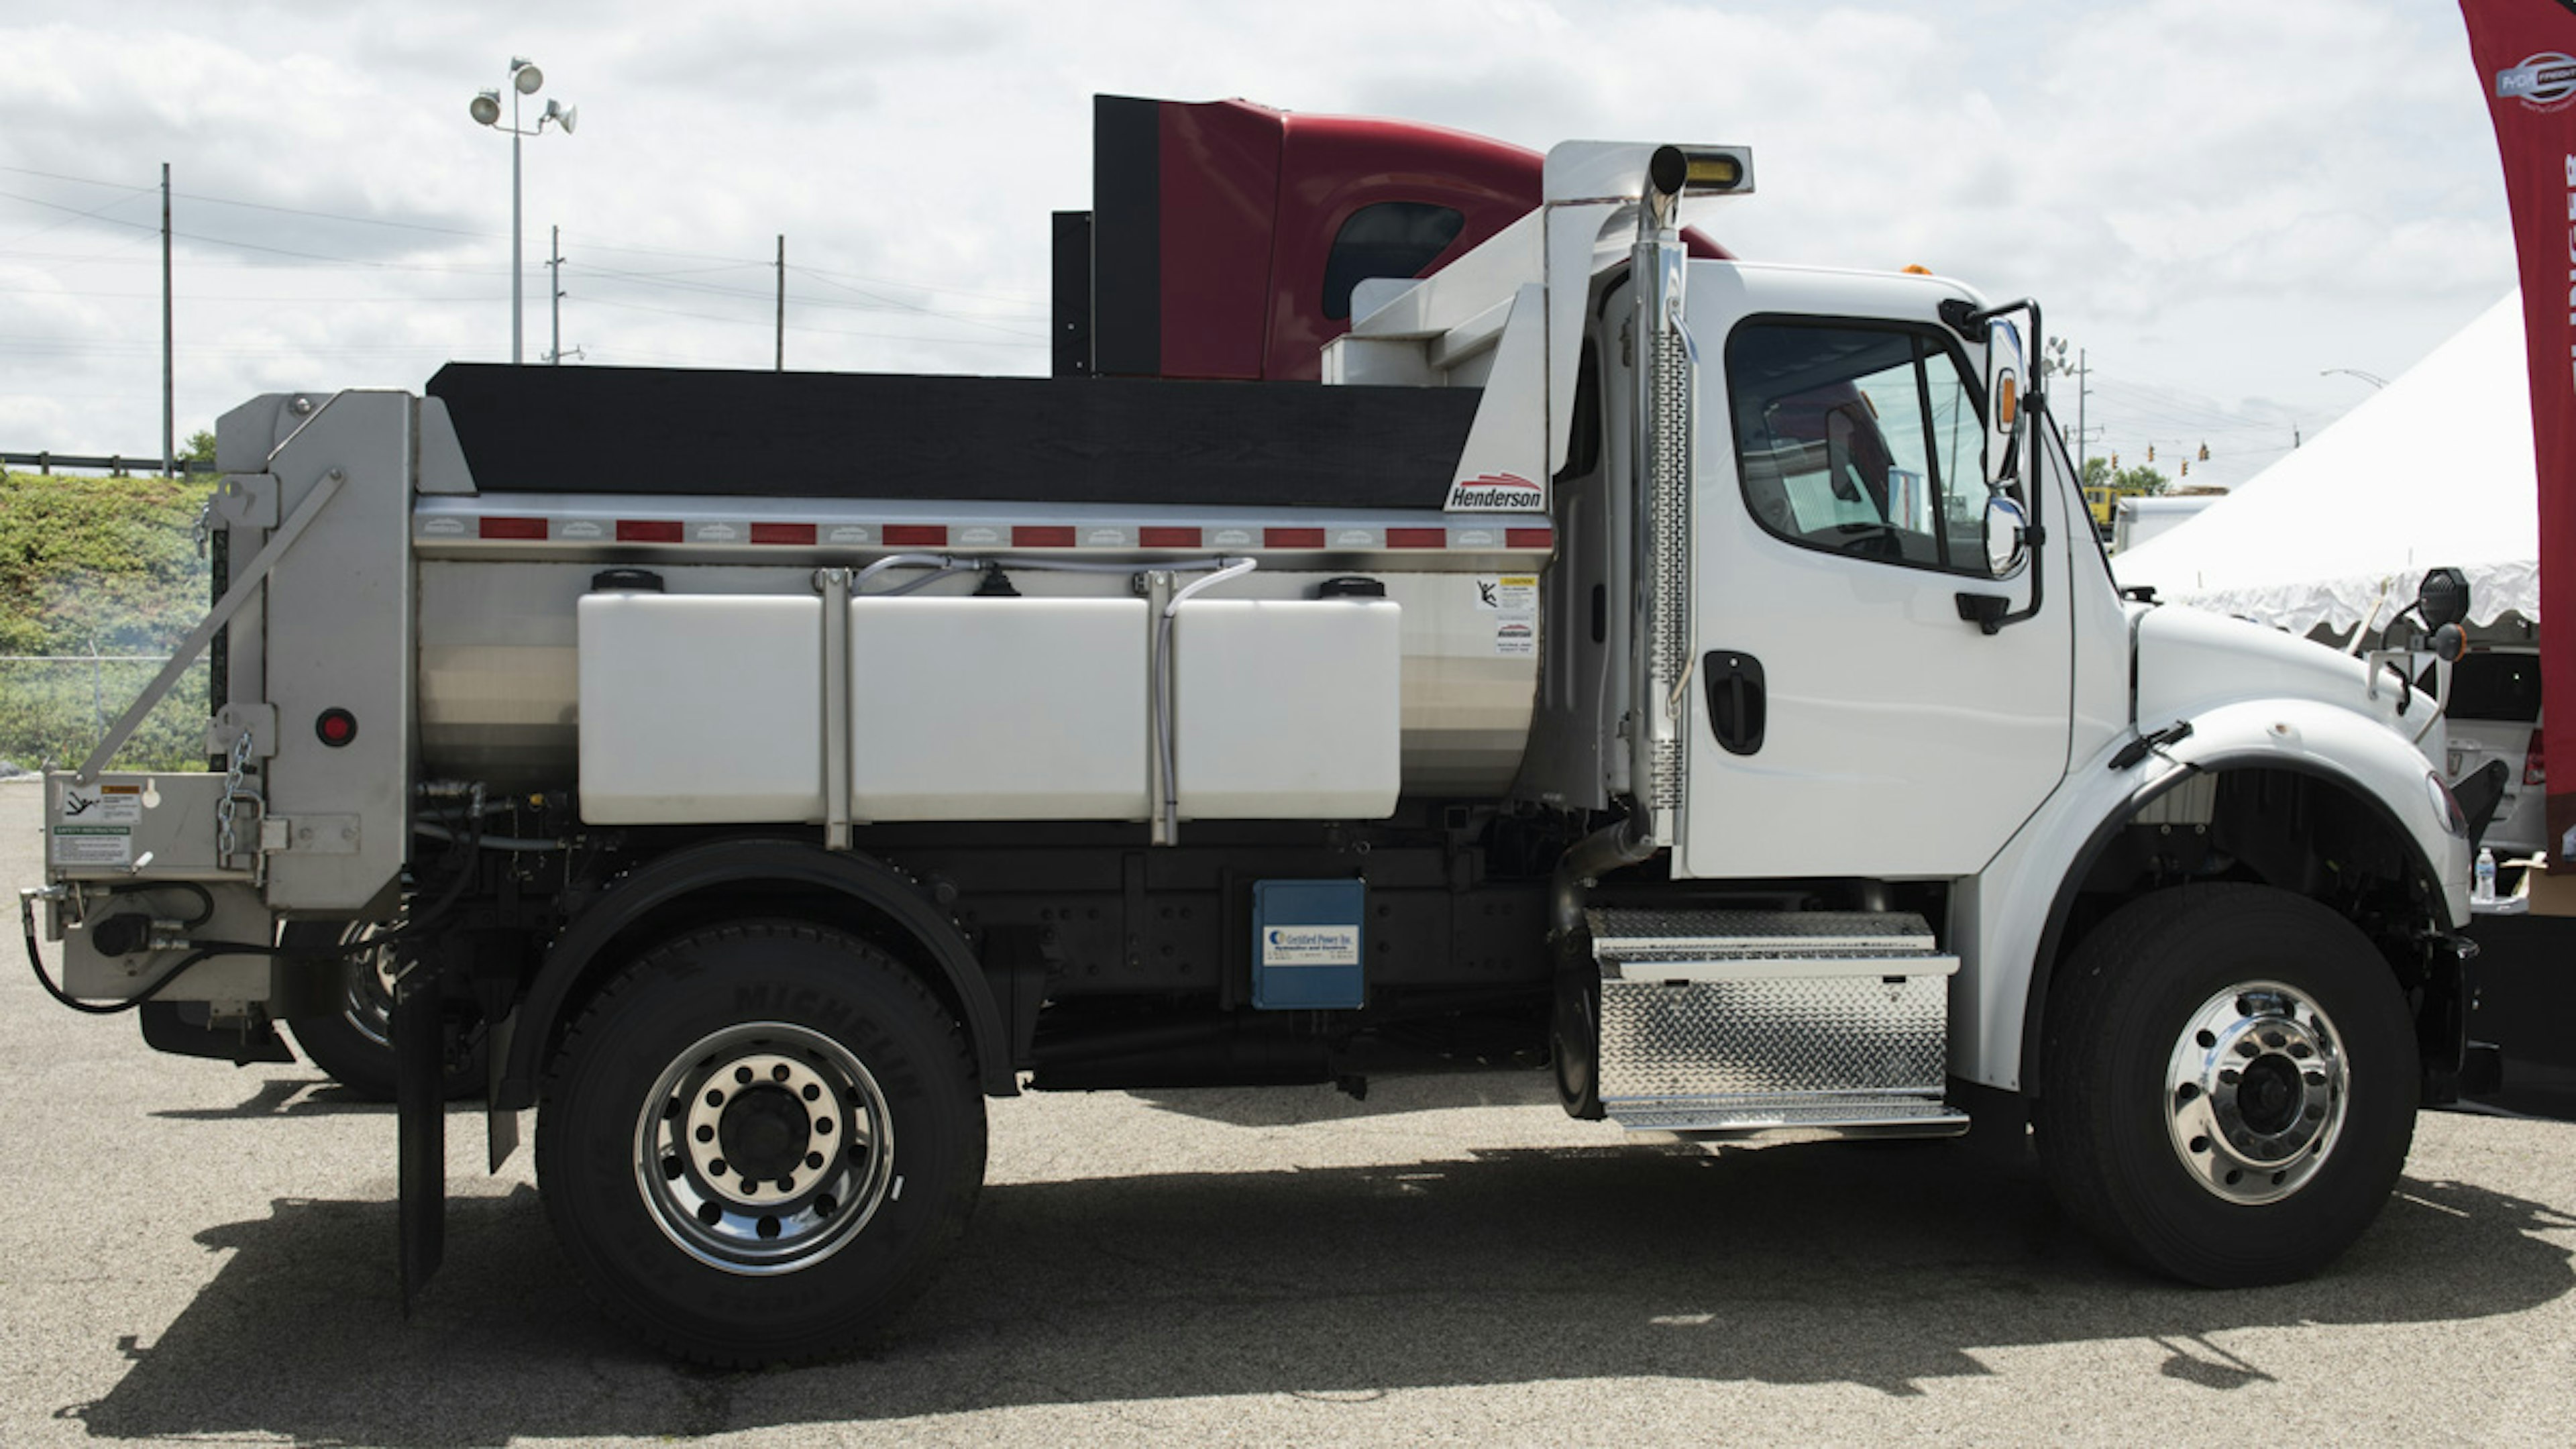 Medium Duty Municipal Snow Truck That can spread salt, liquid, and plow snow 